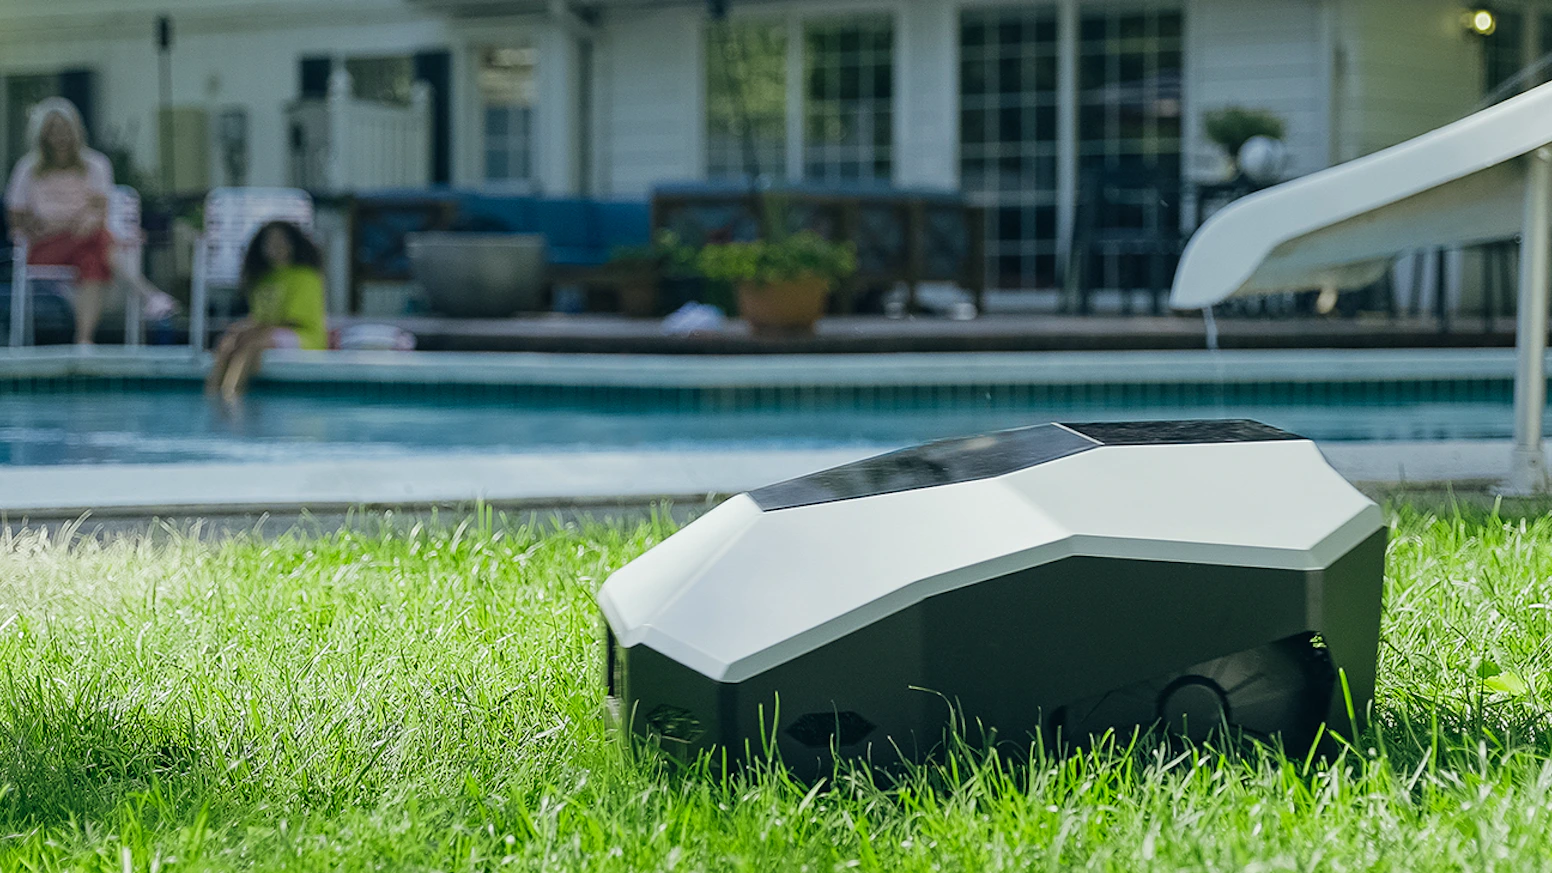 Lawna mower suspended by Kickstarter